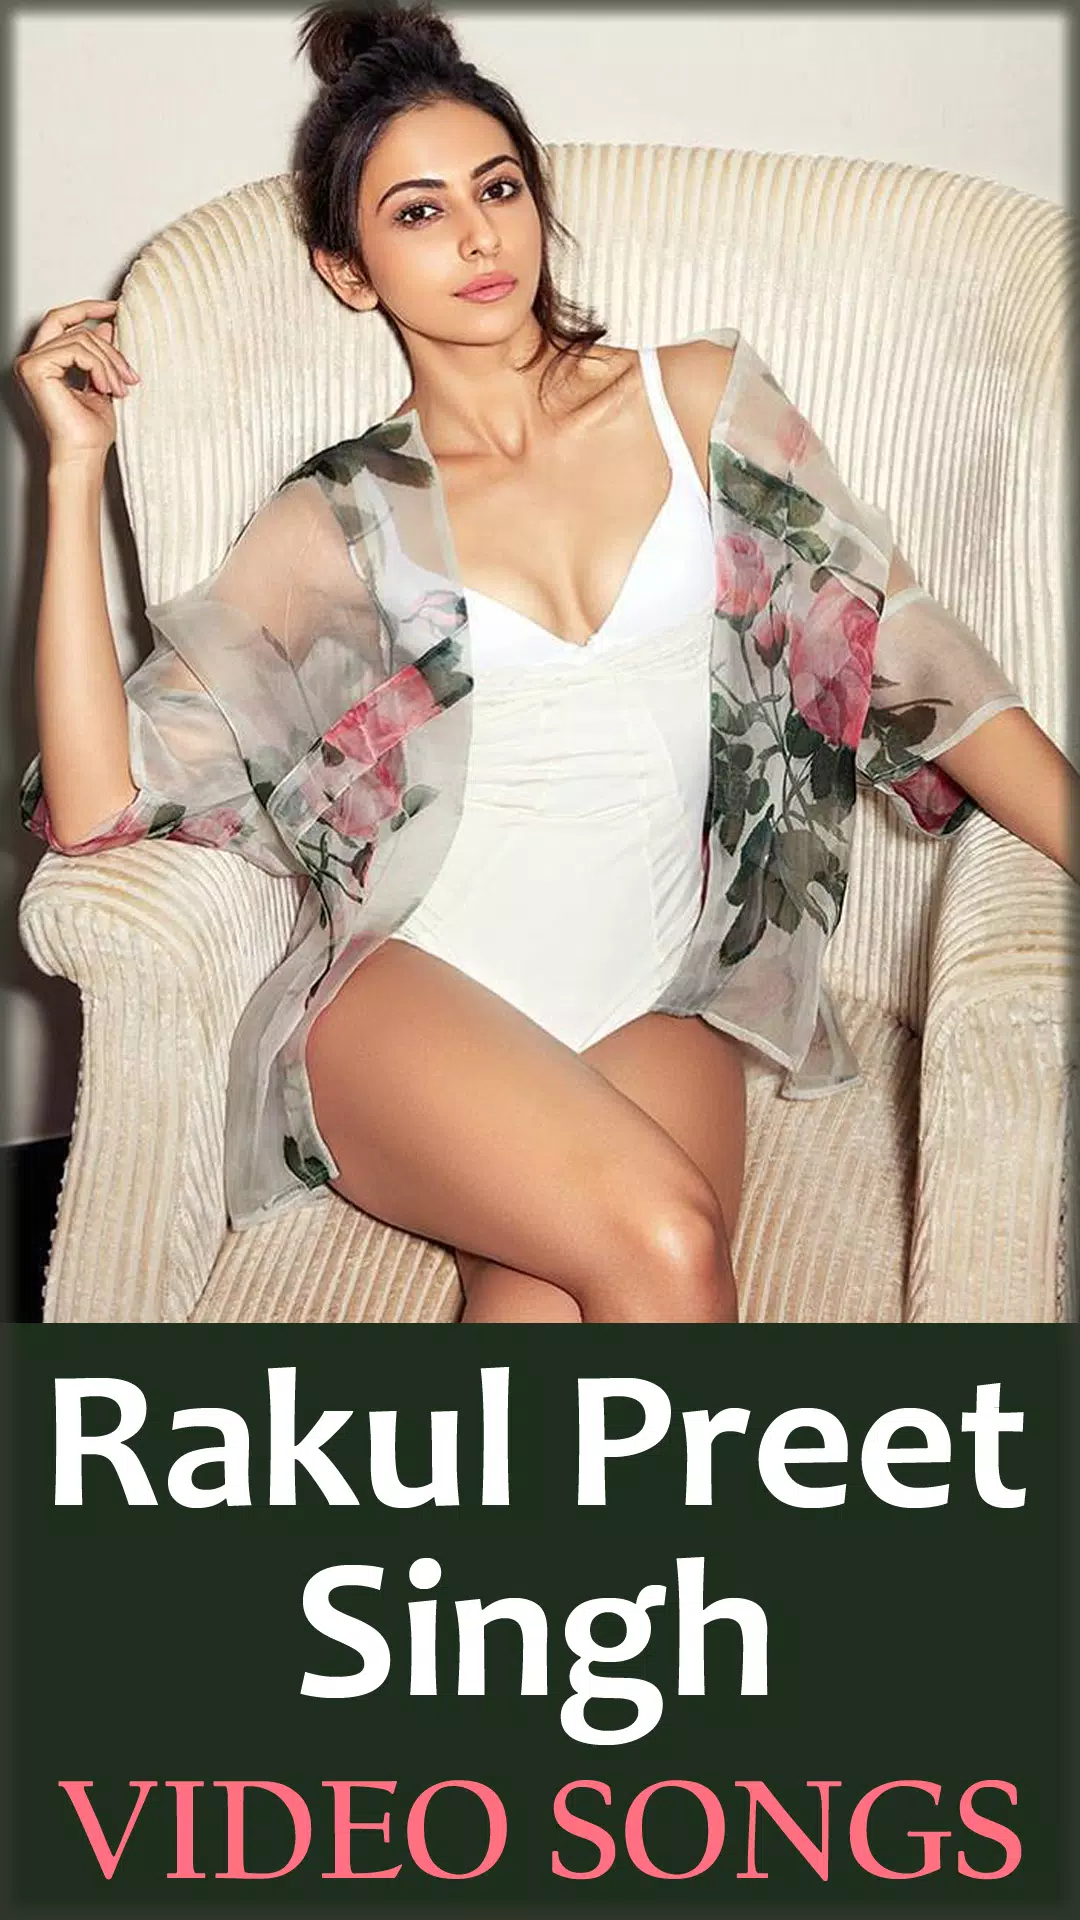 Rakul Preet Pron Videos - Rakul Preet Singh Hot Hd Video Songs App APK per Android Download